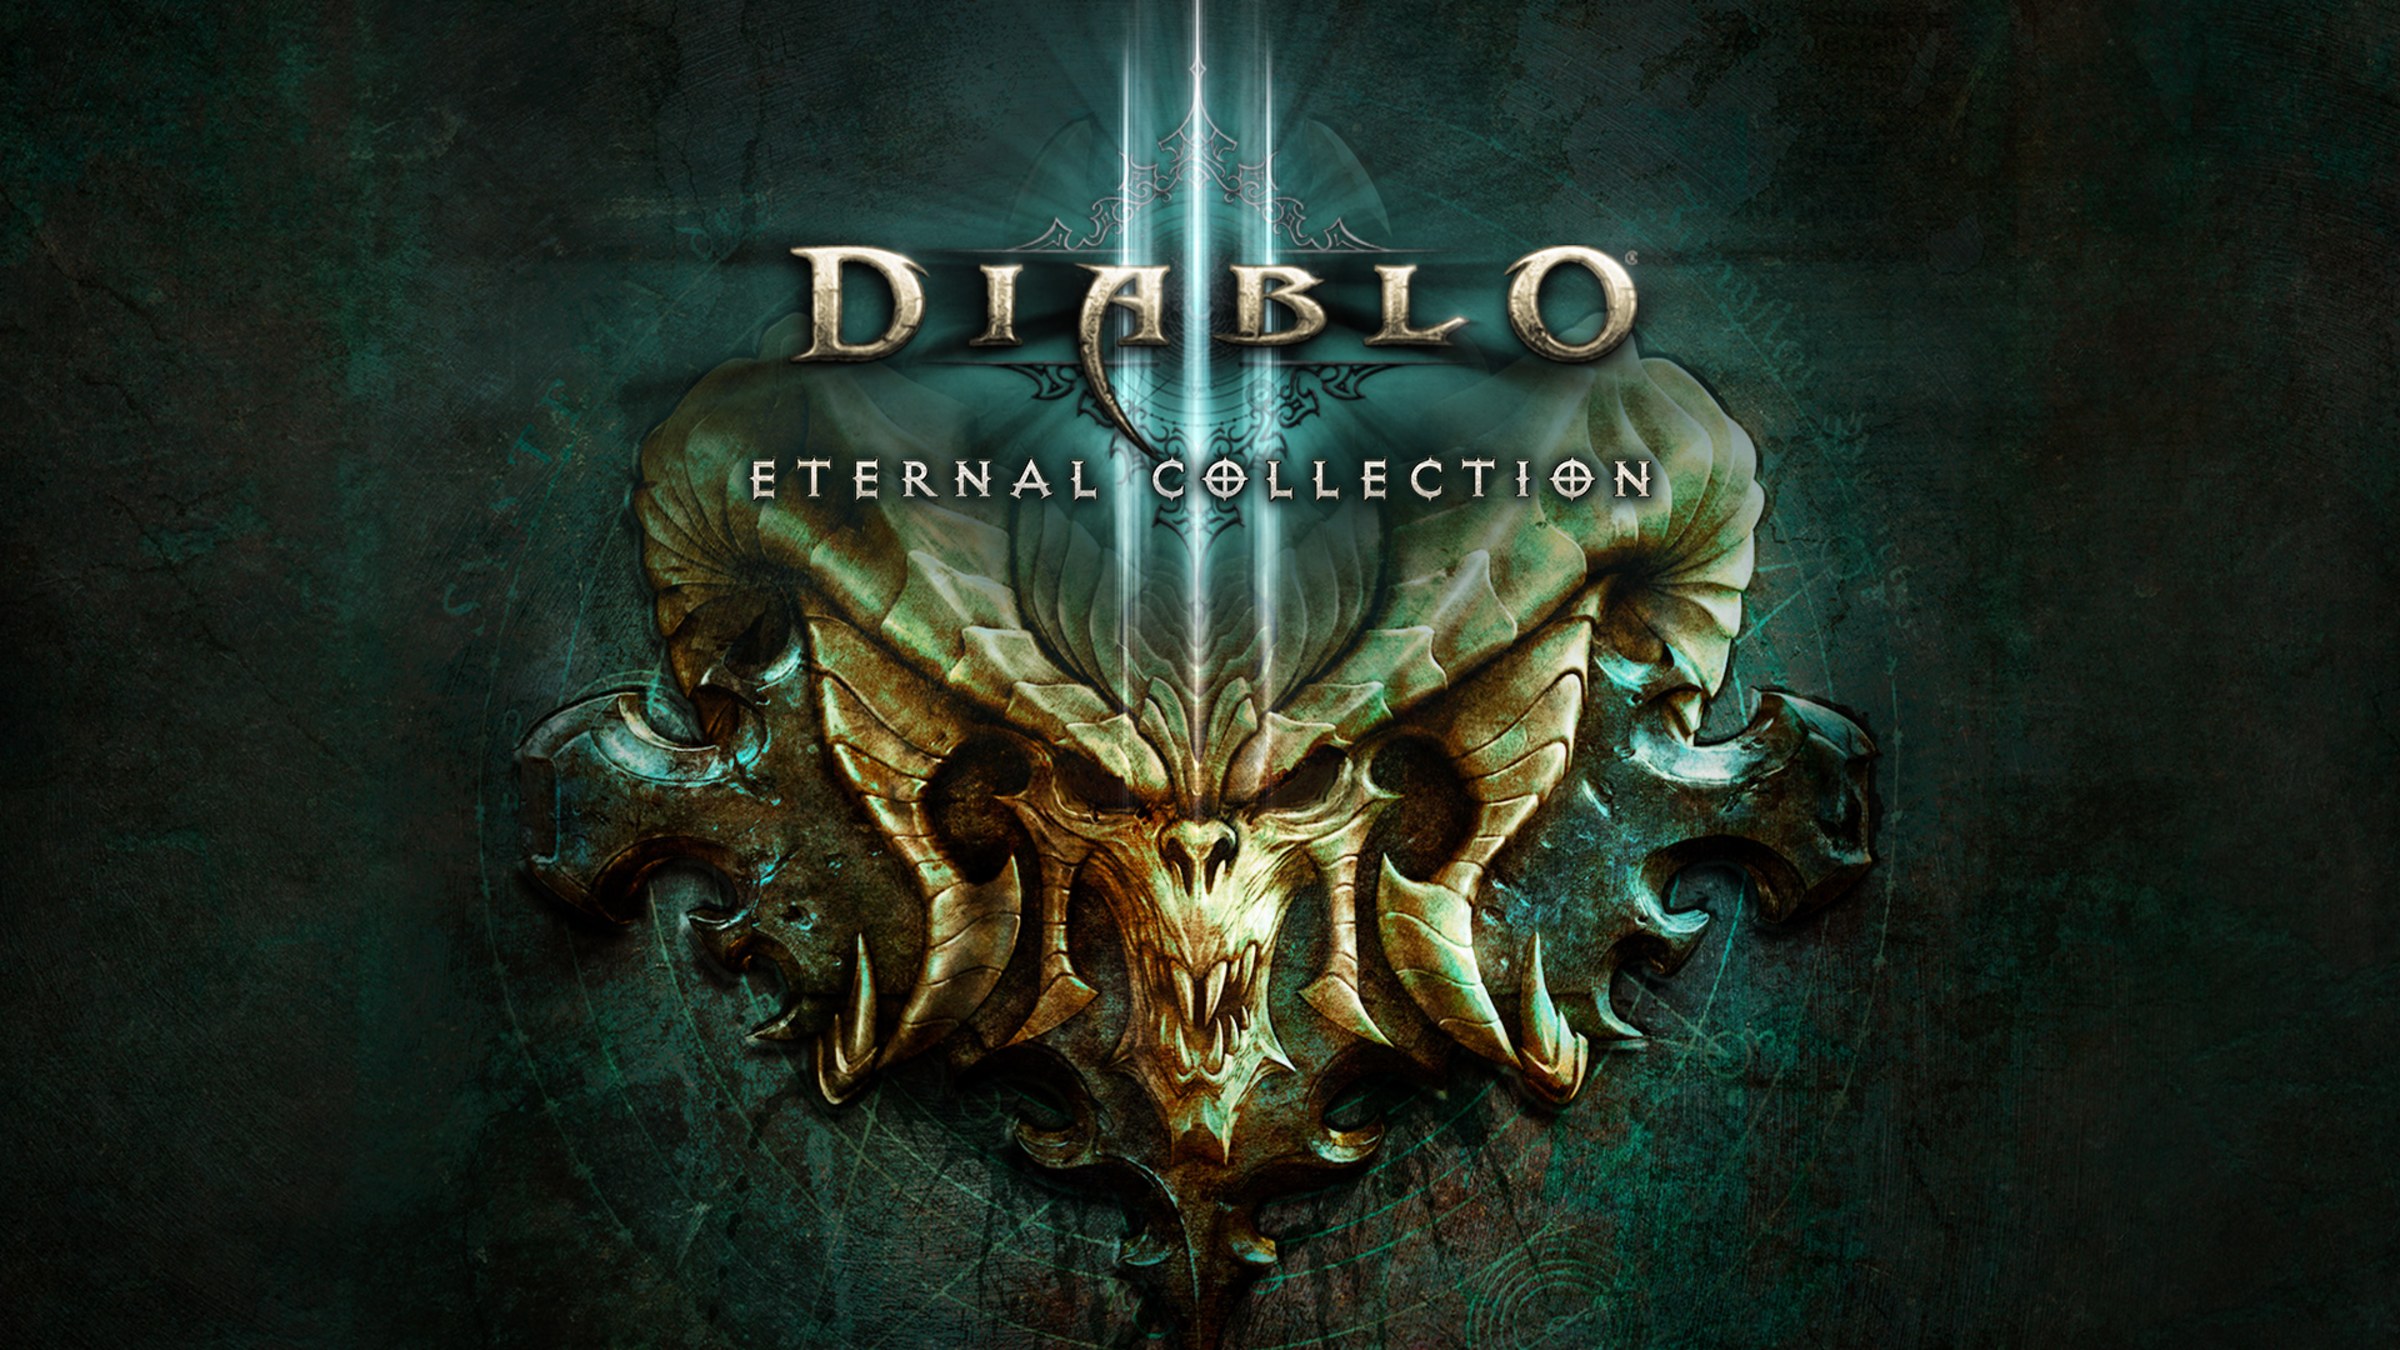 Diablo III: Eternal Collection for Nintendo Switch - Nintendo Official Site